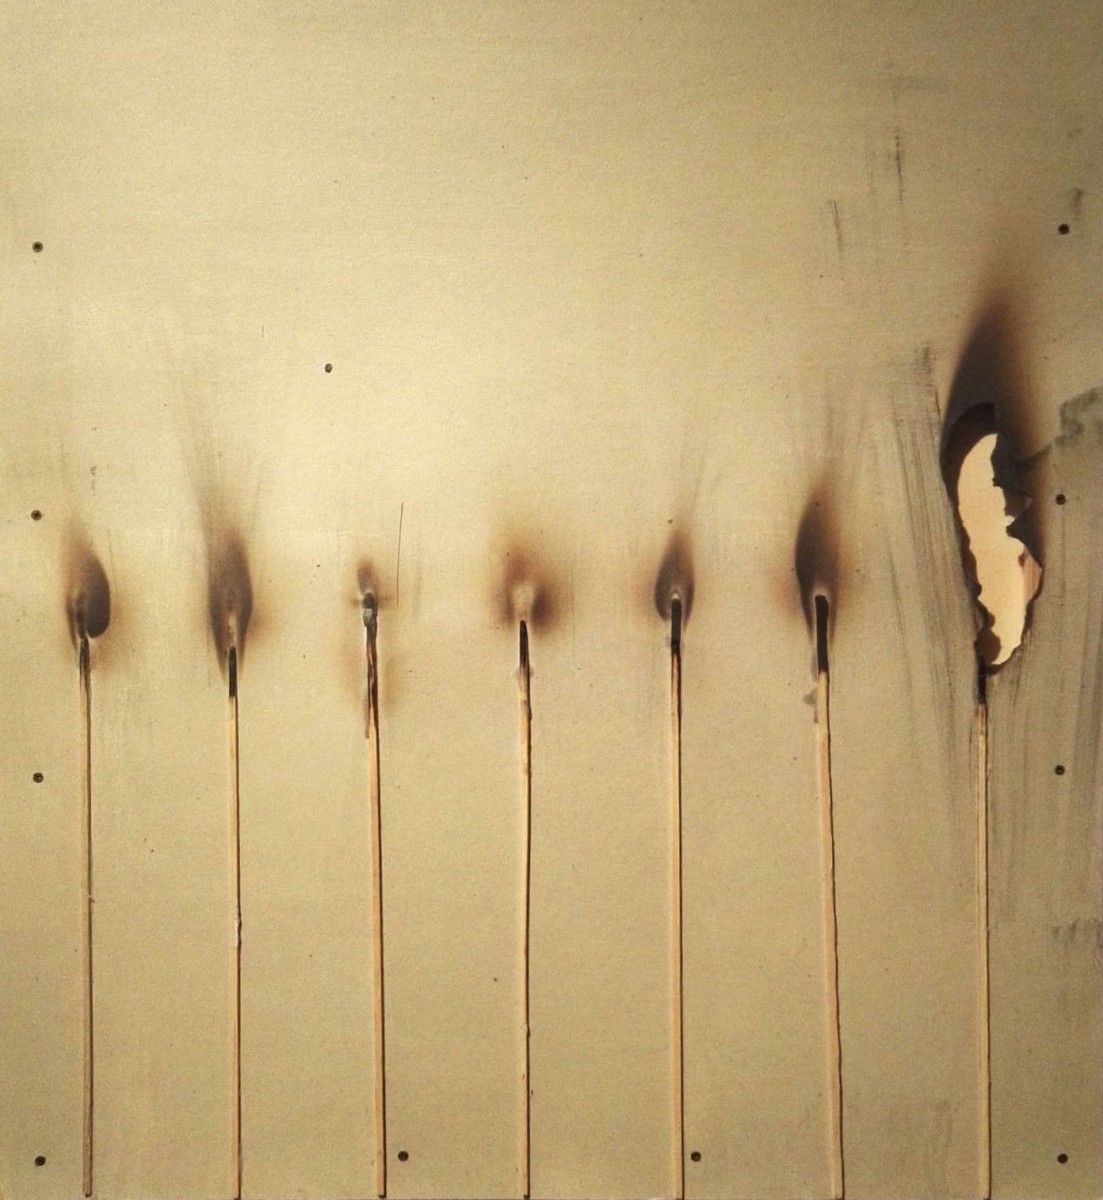 Bernard-Aubertin-Dessin-de-feu-1974-fiammiferi-bruciati-su-cartone-55×65-cm